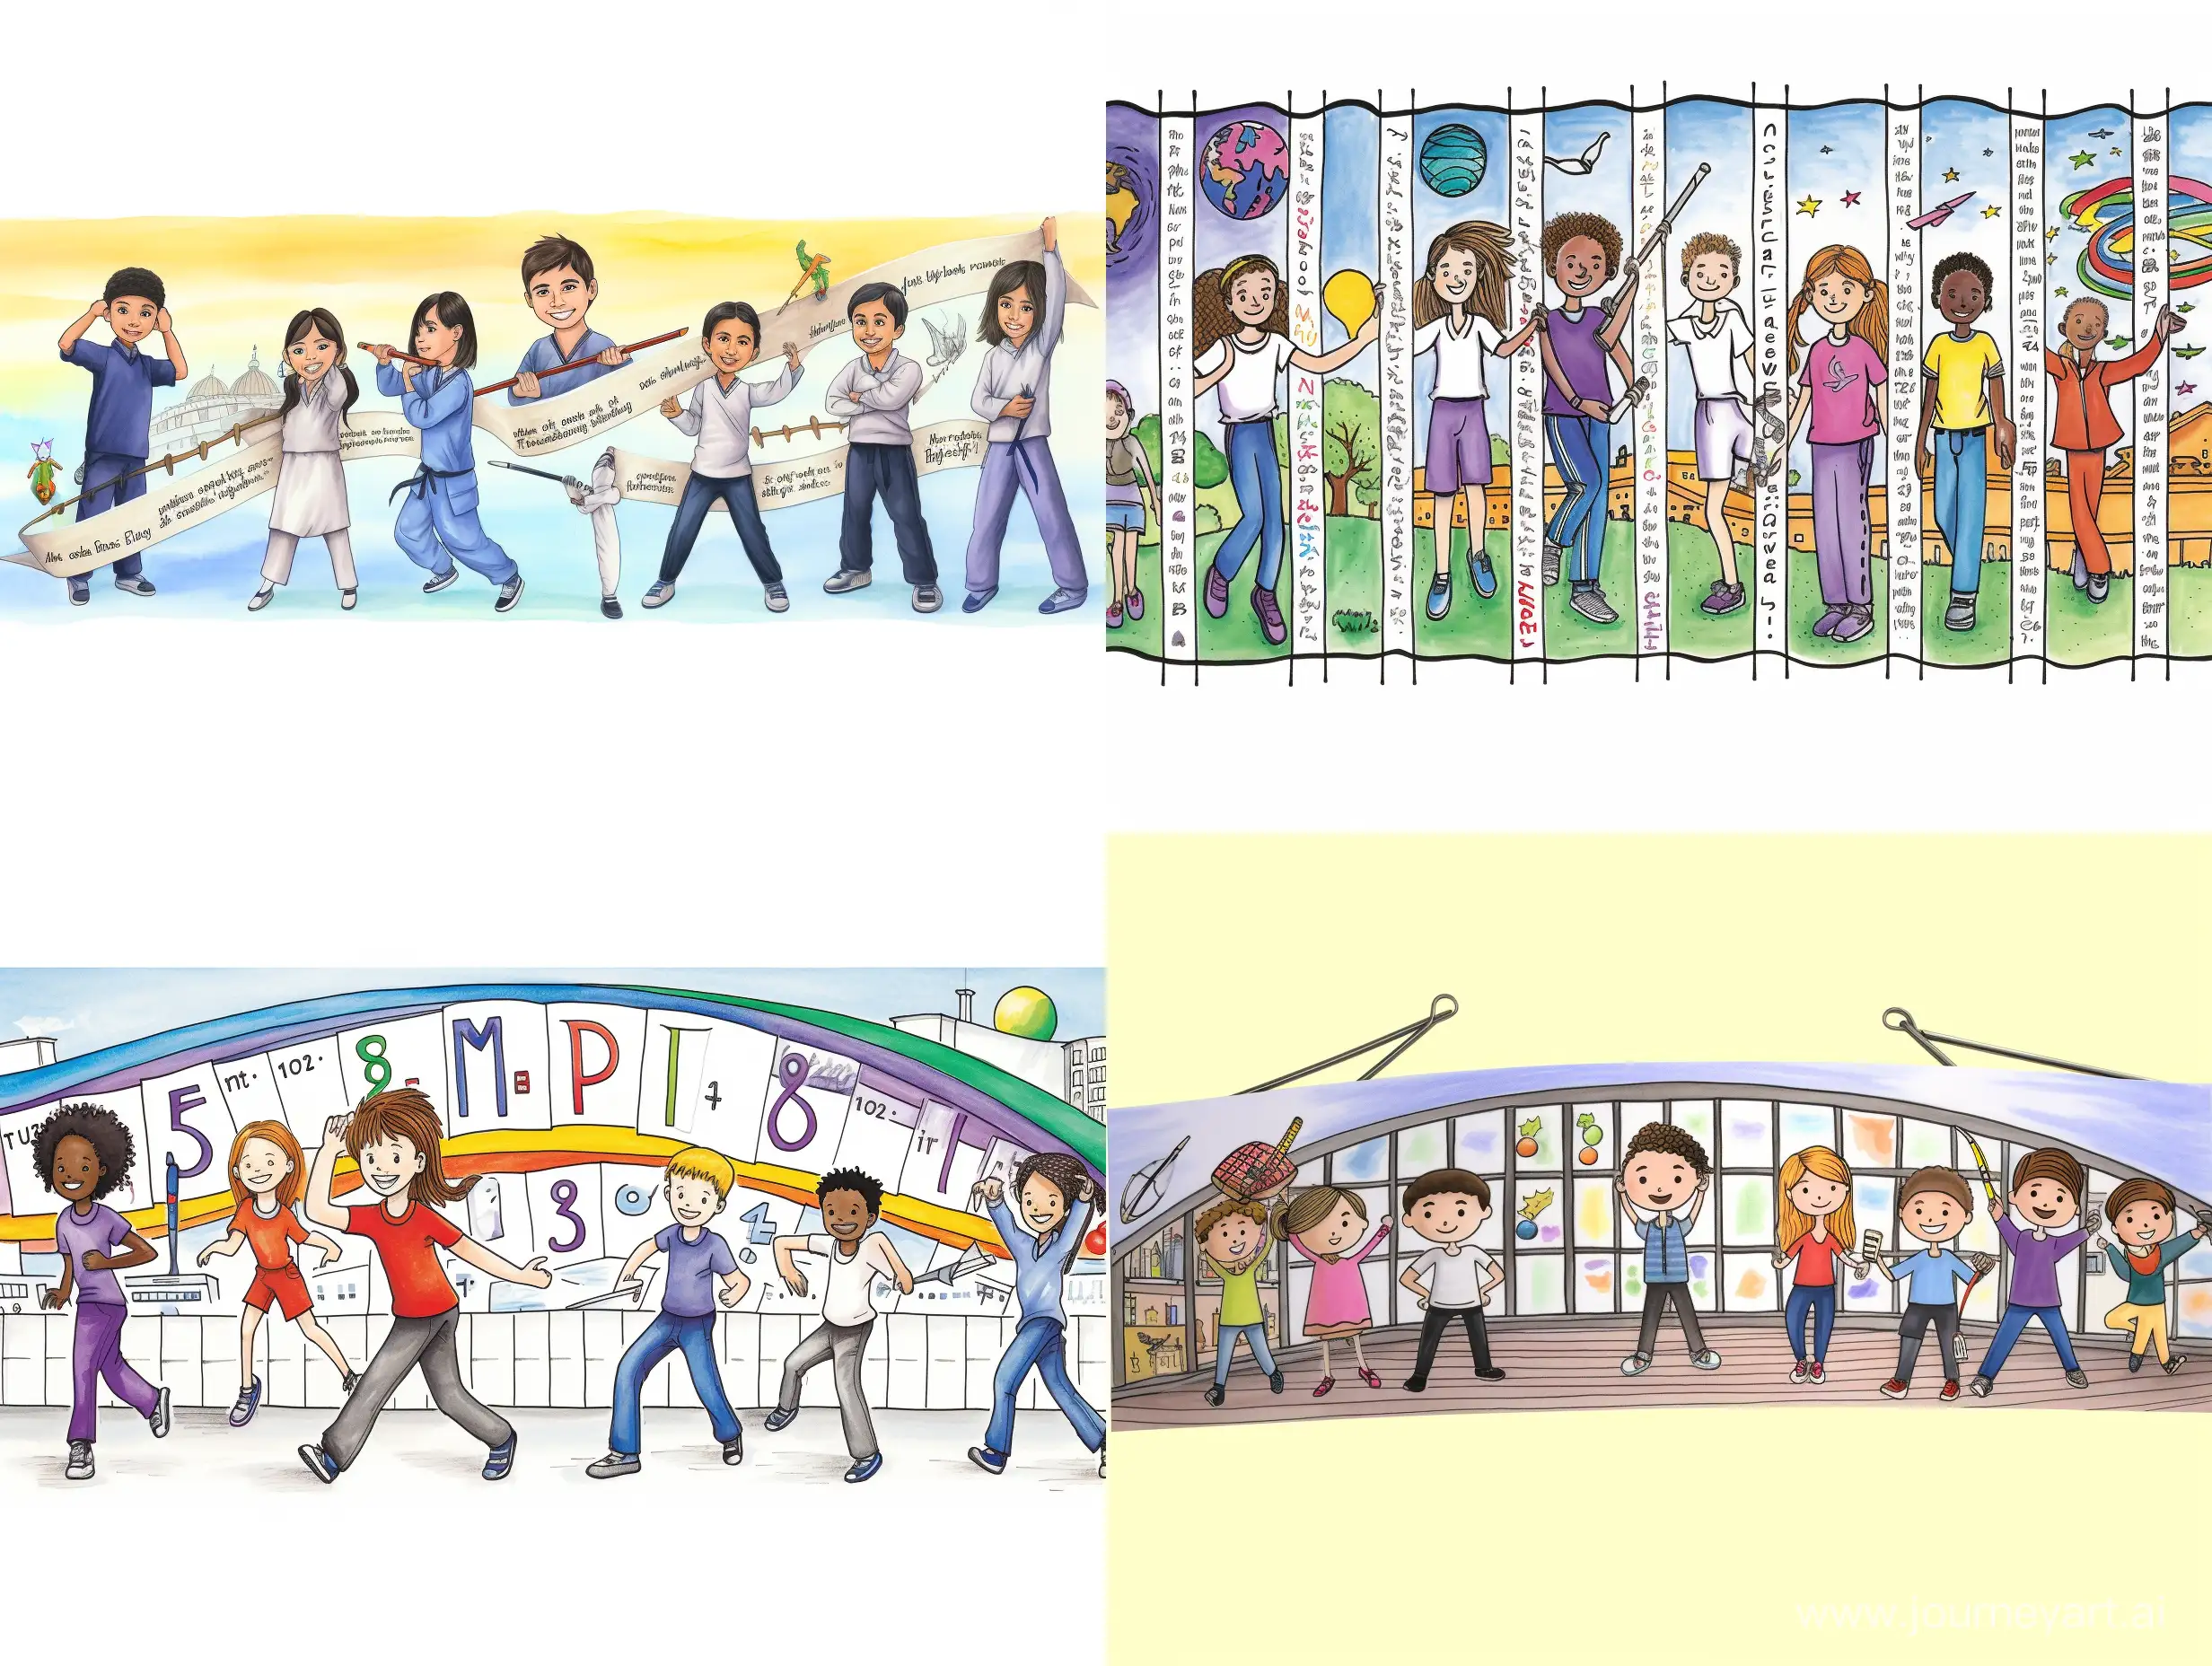 Celebrating-School-Spirit-Dynamic-Activities-of-5-Students-in-Vibrant-Rainbow-Theme